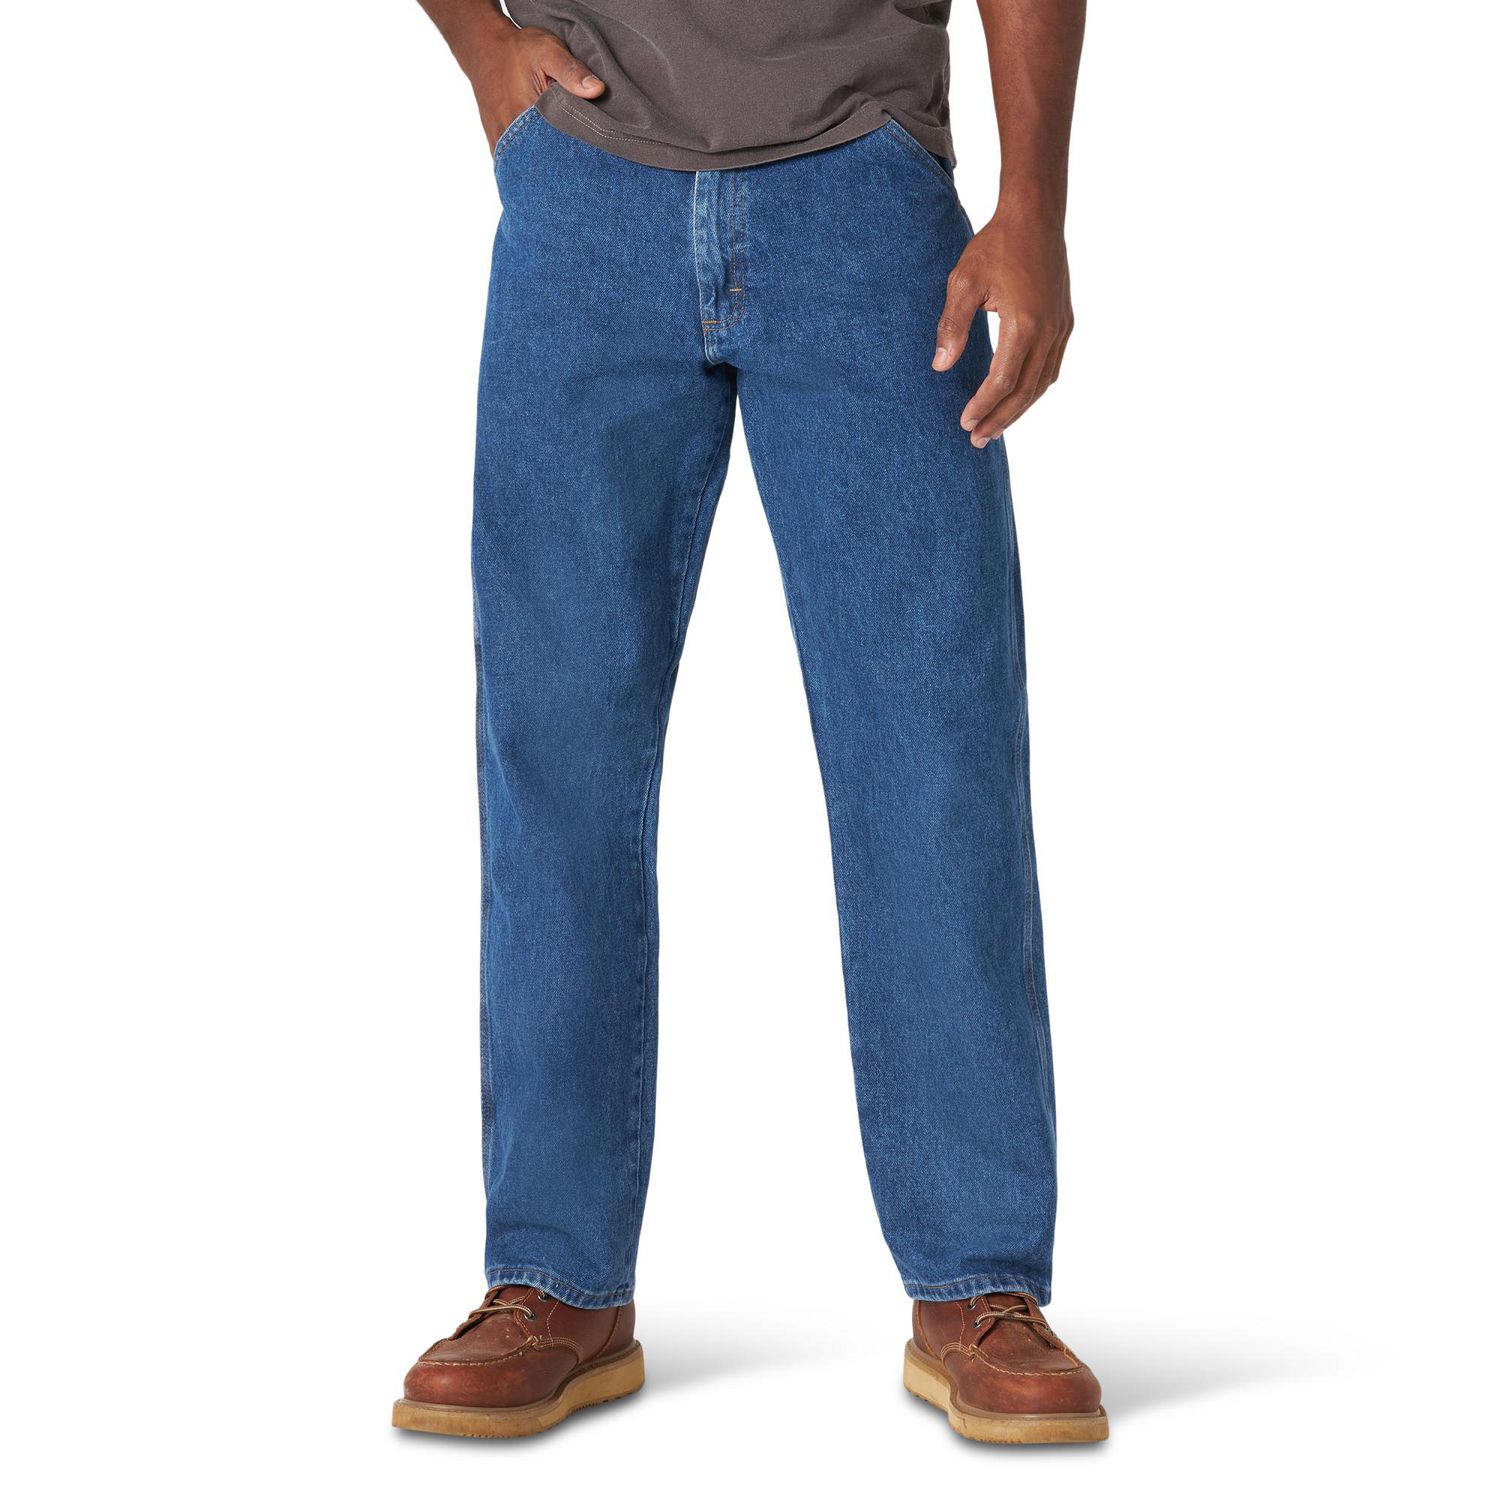 Top 82+ imagen wrangler carpenter jeans walmart - Abzlocal.mx